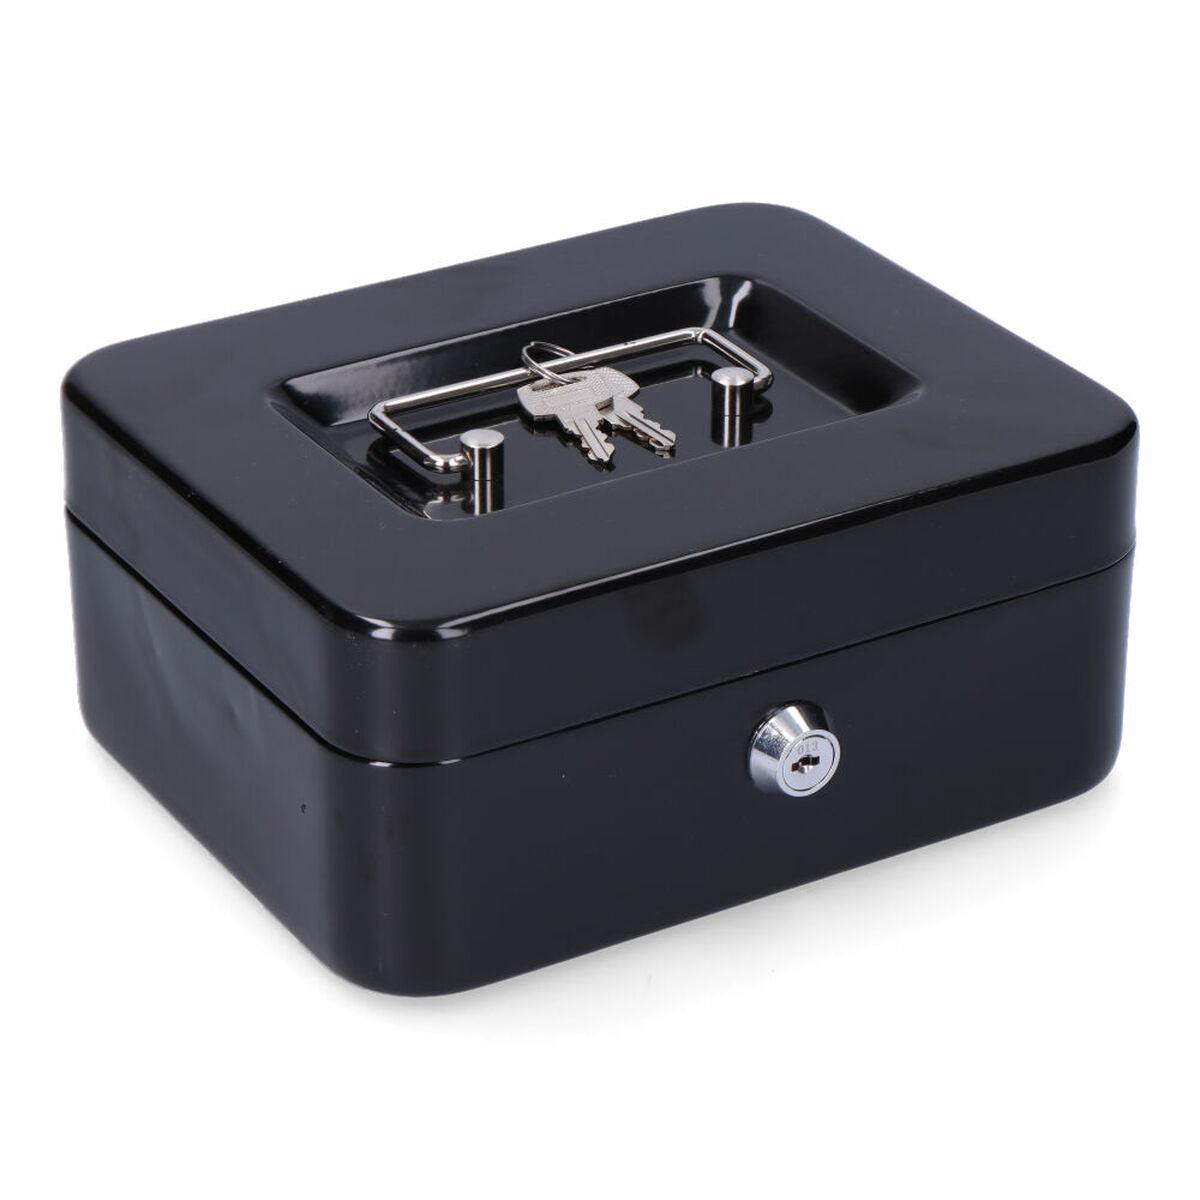 Safe-deposit box Micel CFC09 M13396 20 x 16 x 9 cm Black Steel - Sterilamo